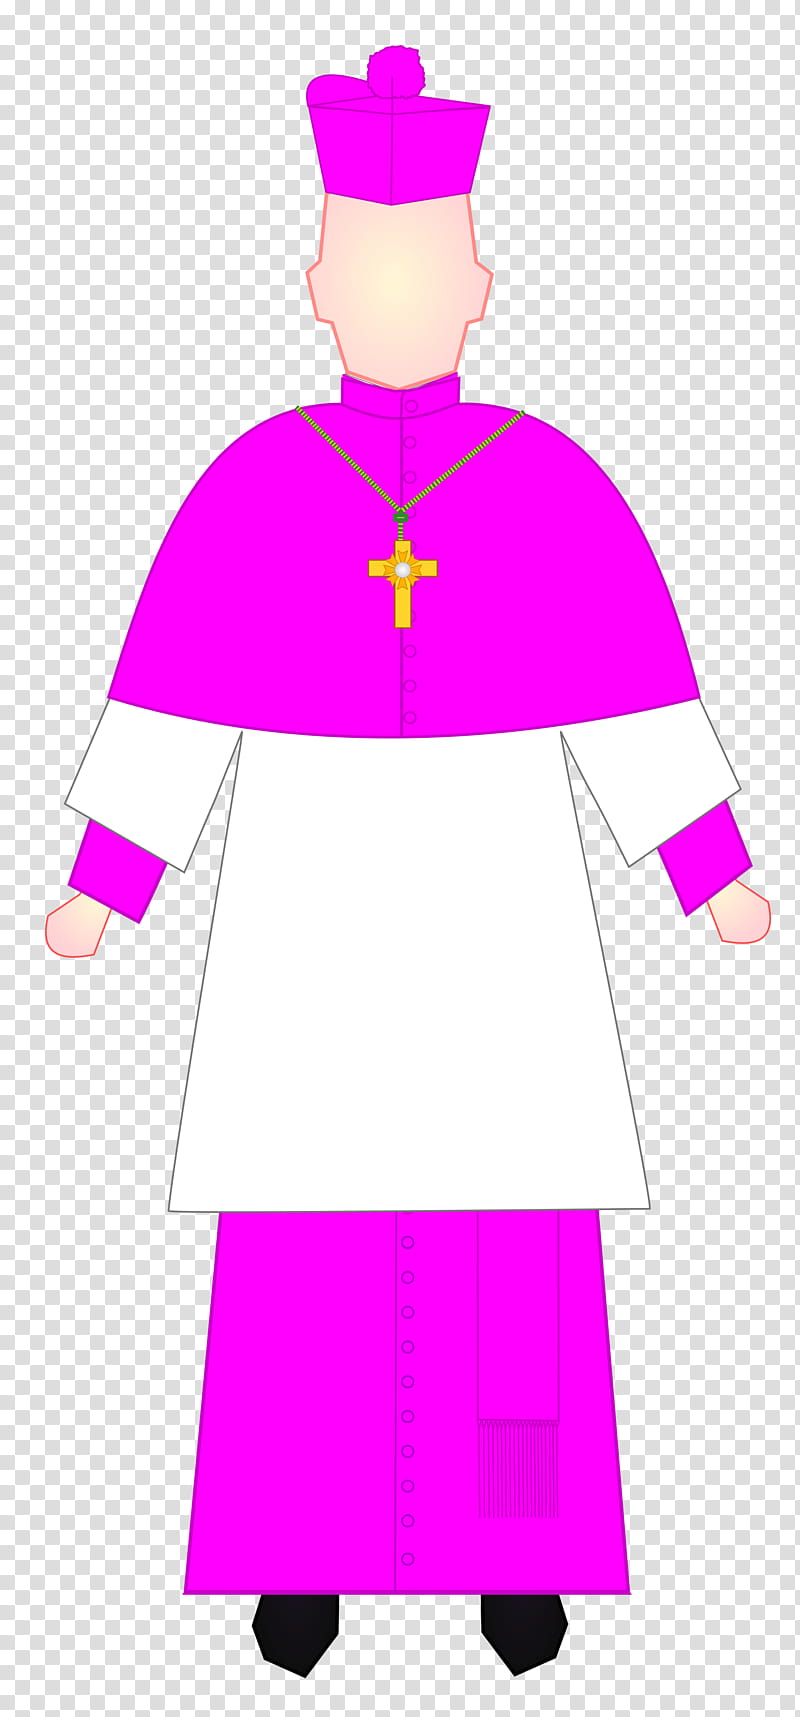 Choir Dress Clothing, Bishop, Priest, Cassock, Cardinal, Clergy, Deacon, Mozzetta transparent background PNG clipart